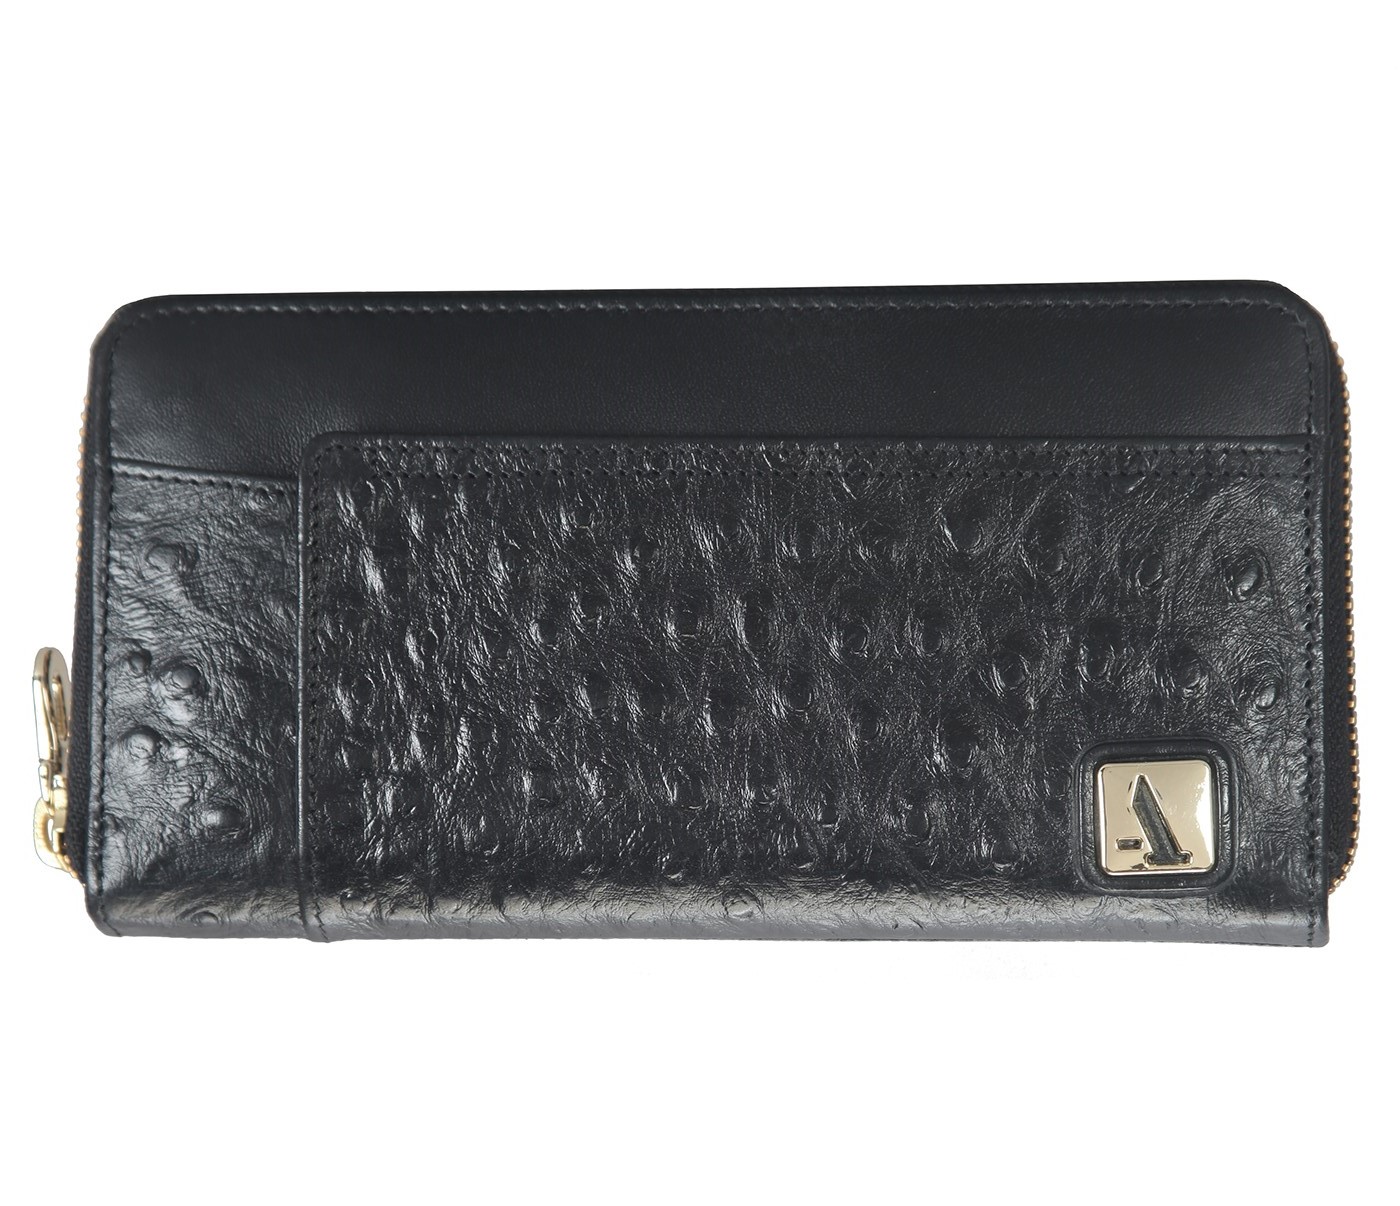 Wallet-Beyonce-Women's wallet cum clutch in Genuine Leather - Black